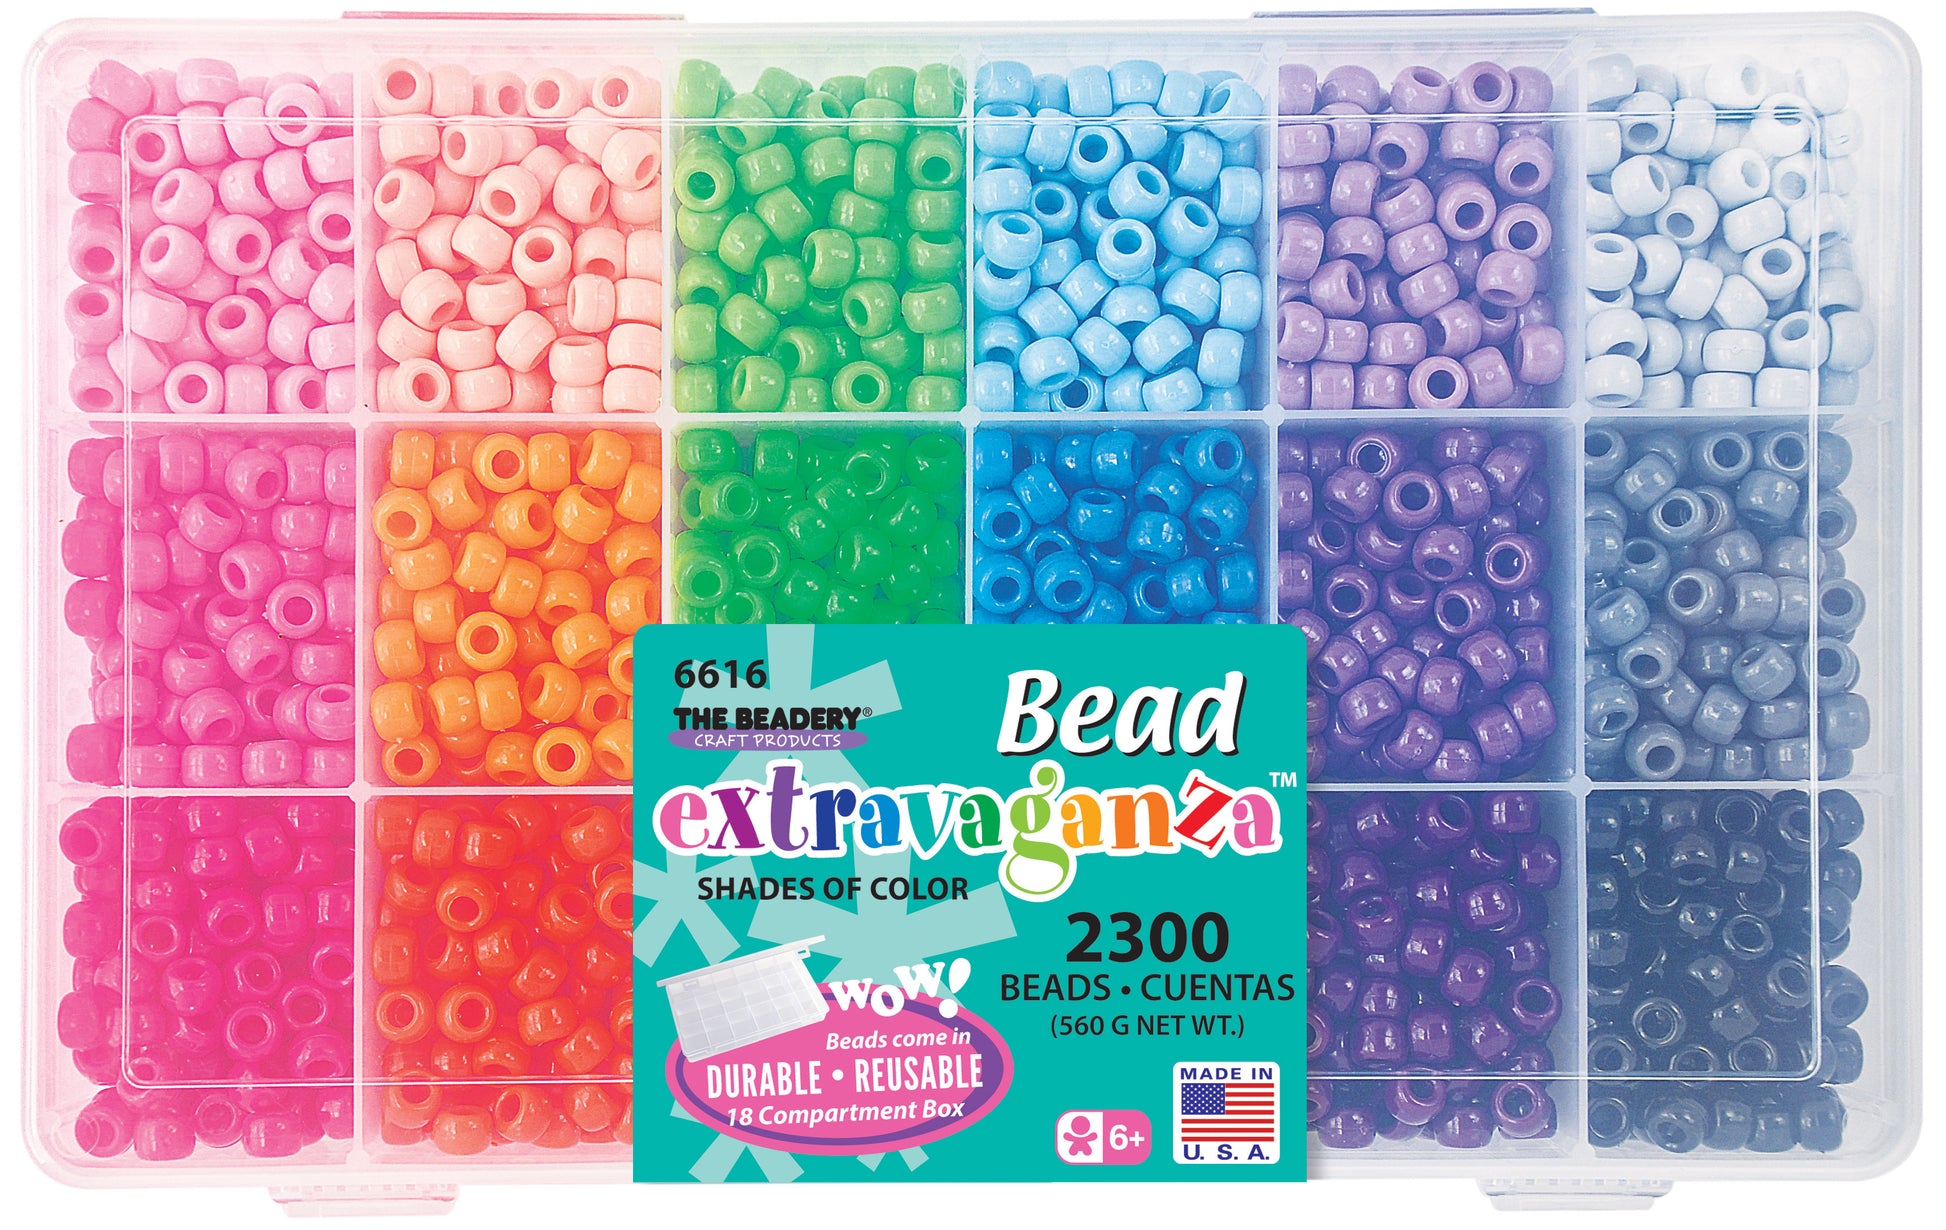 Bead Box Extravaganza Shades of Color 6616 - Beadery Products